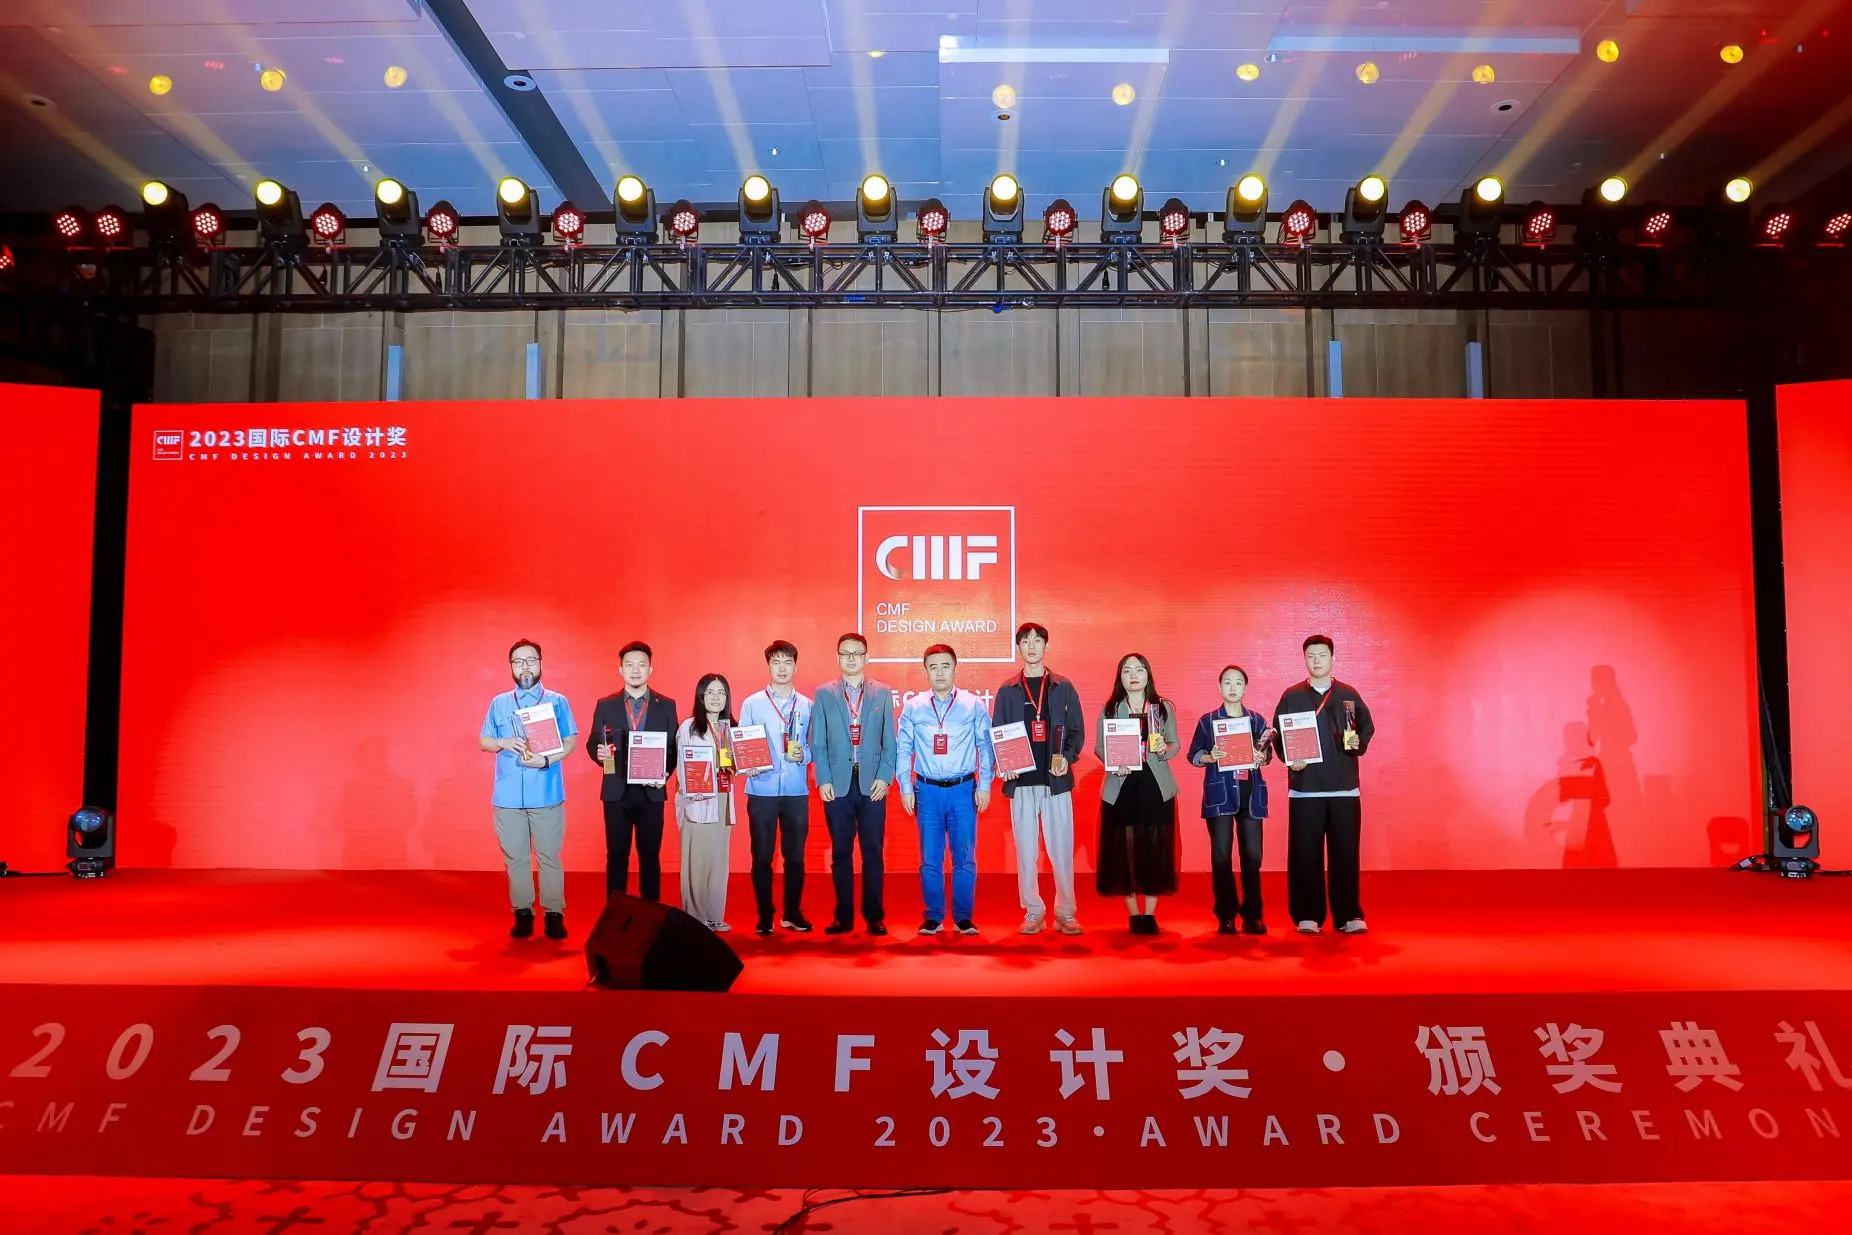 International CMF Design Award 2023 Winners – Second from the left